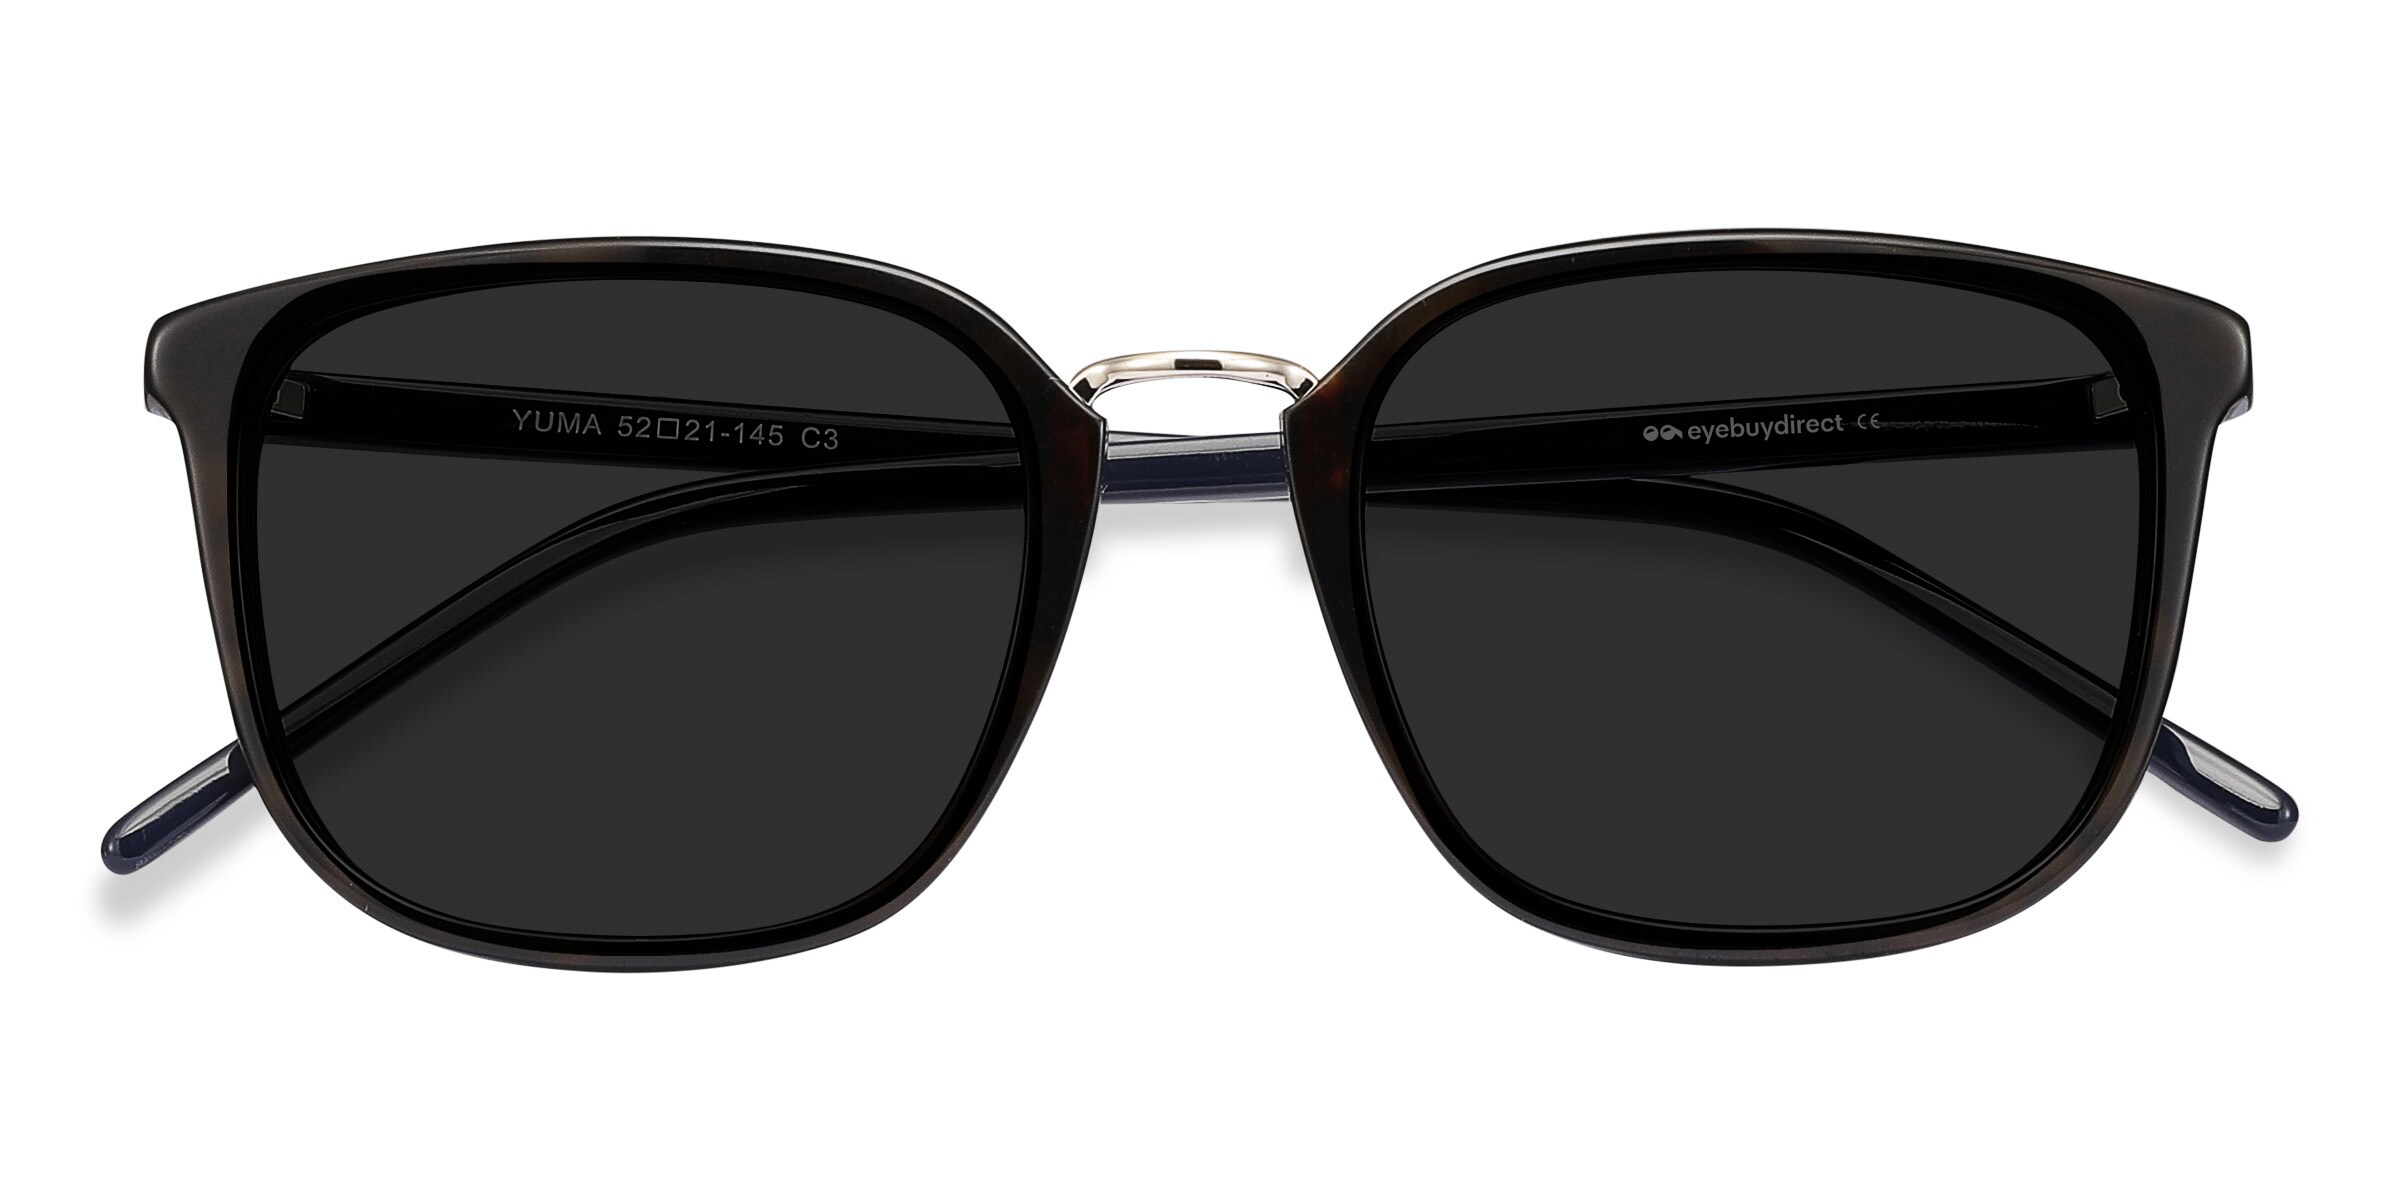 Sunglasses Complextro gold Tortoise Green | All Eyewear | Eyewear |  Lilienthal Berlin - Award-winning Designs